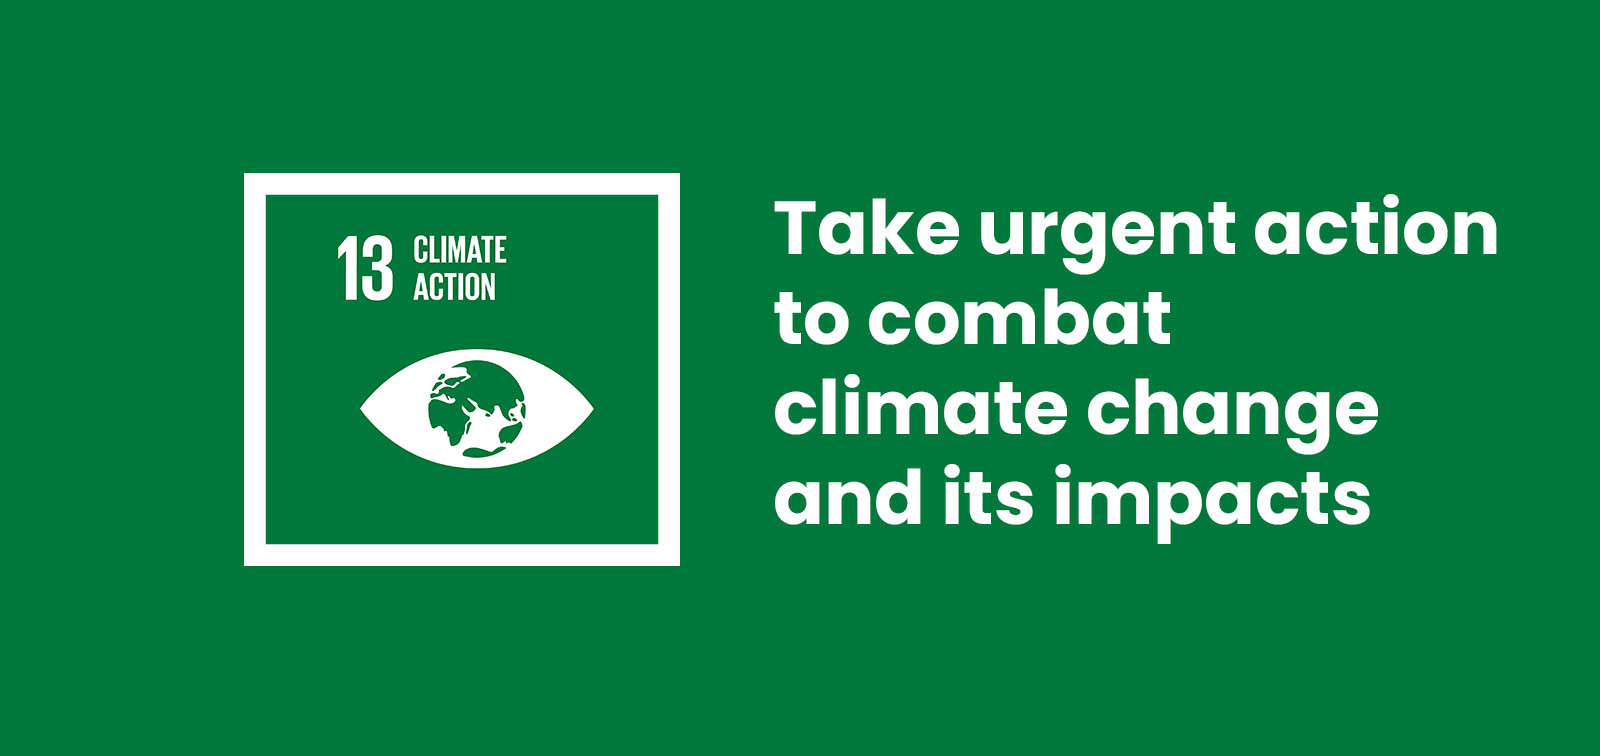 SDG-13-Climate-Action-Image